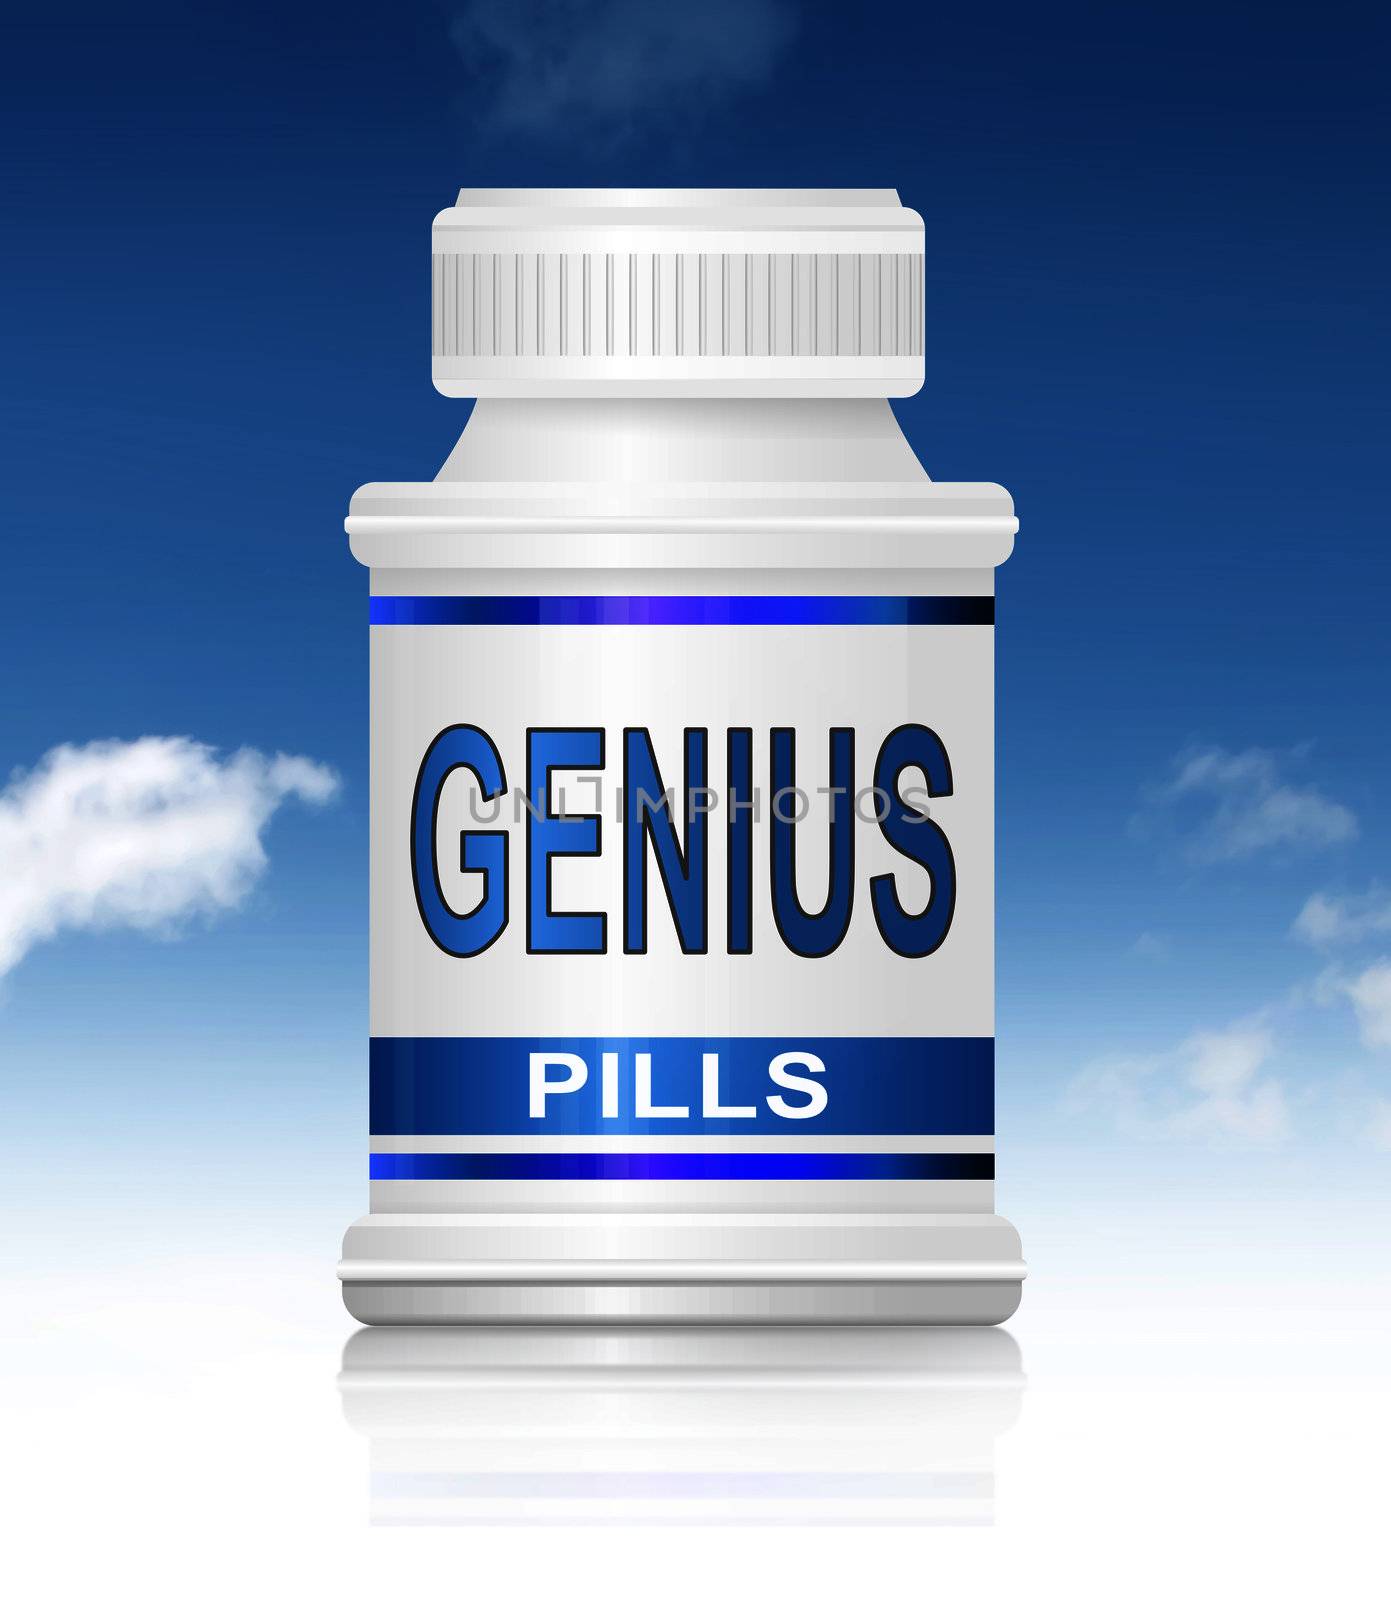 Genius pills. by 72soul